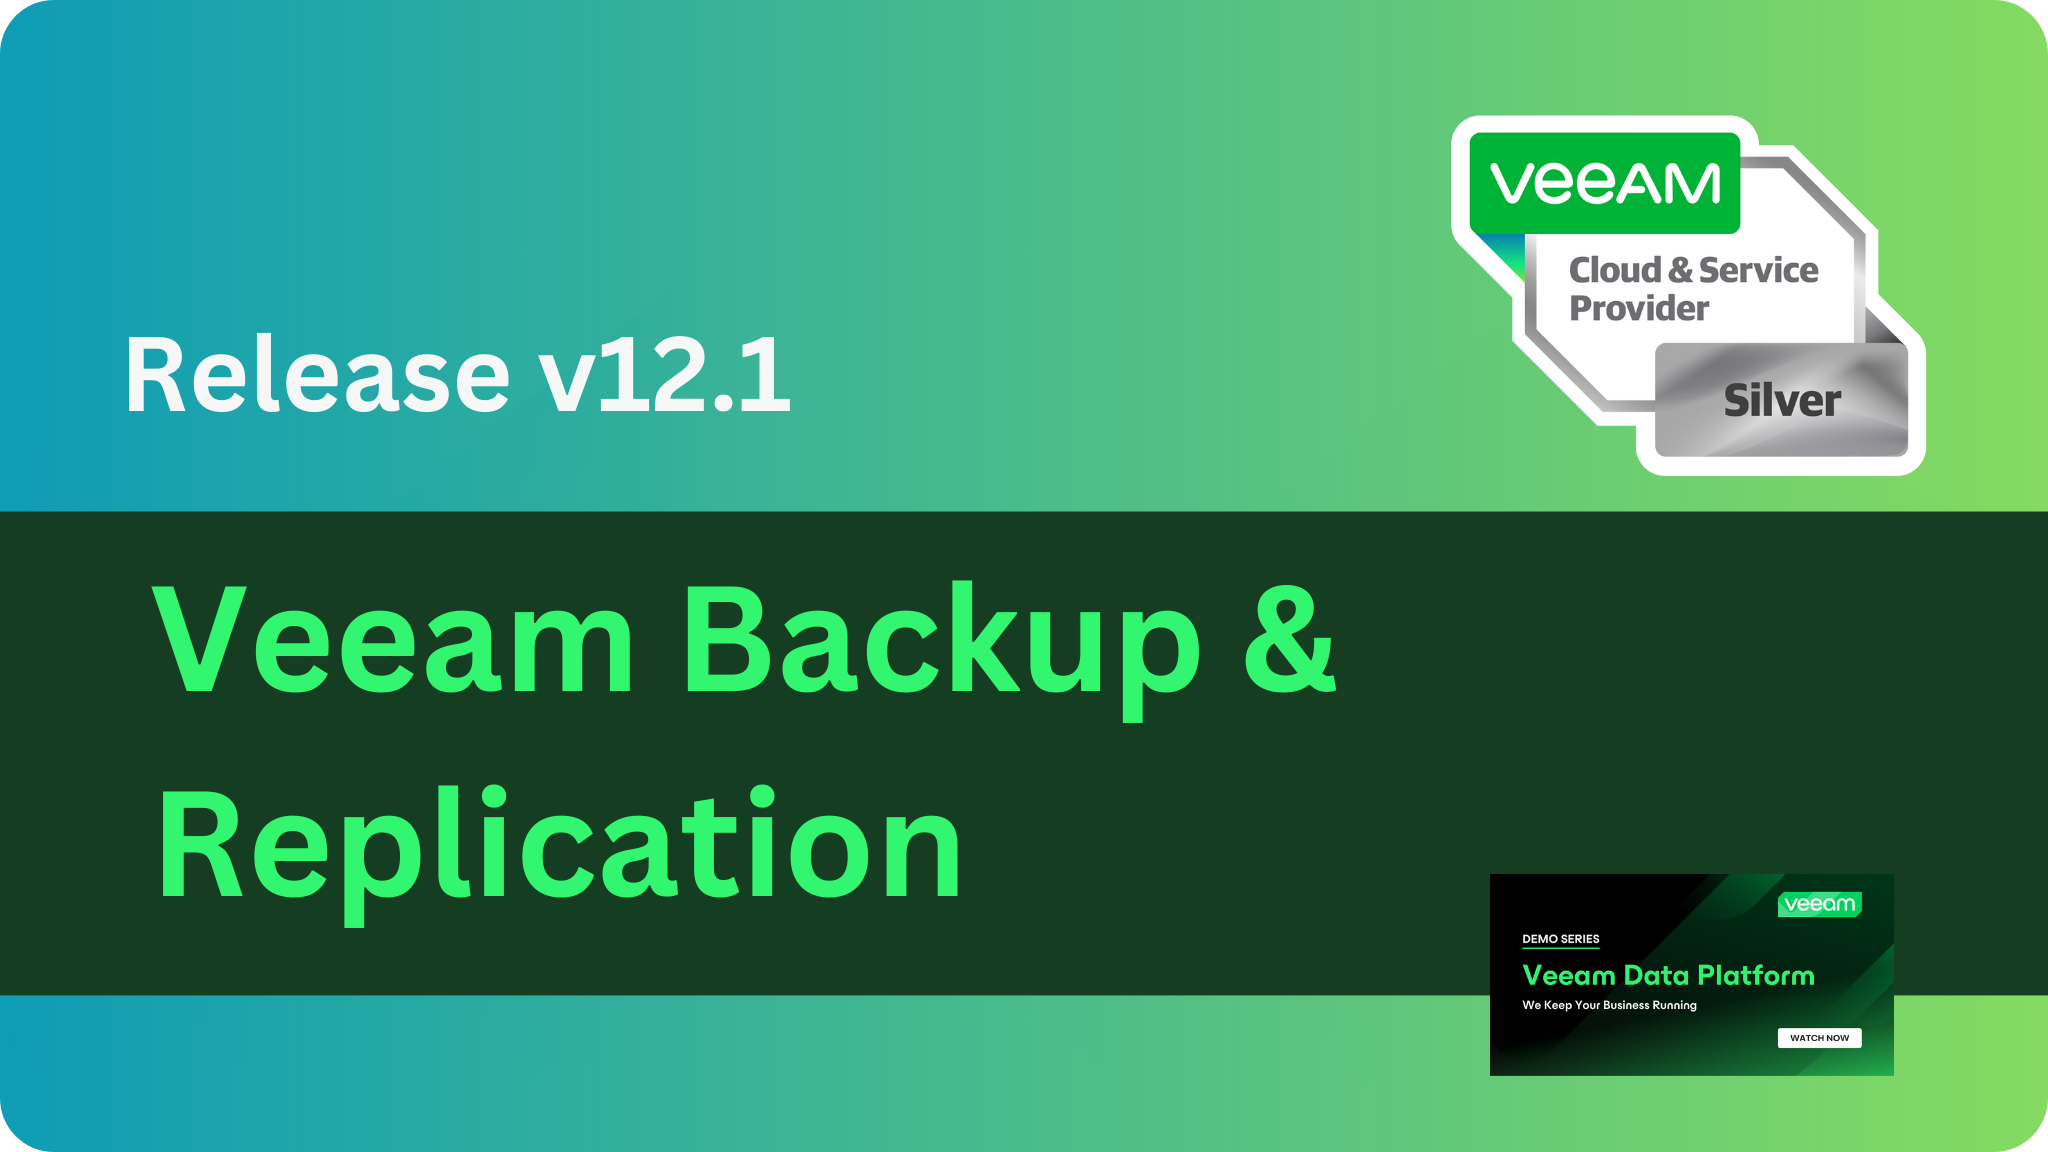 Veeam Release v12.1 Backup 6 Replication in der Veeam Data Platform Update 23H2